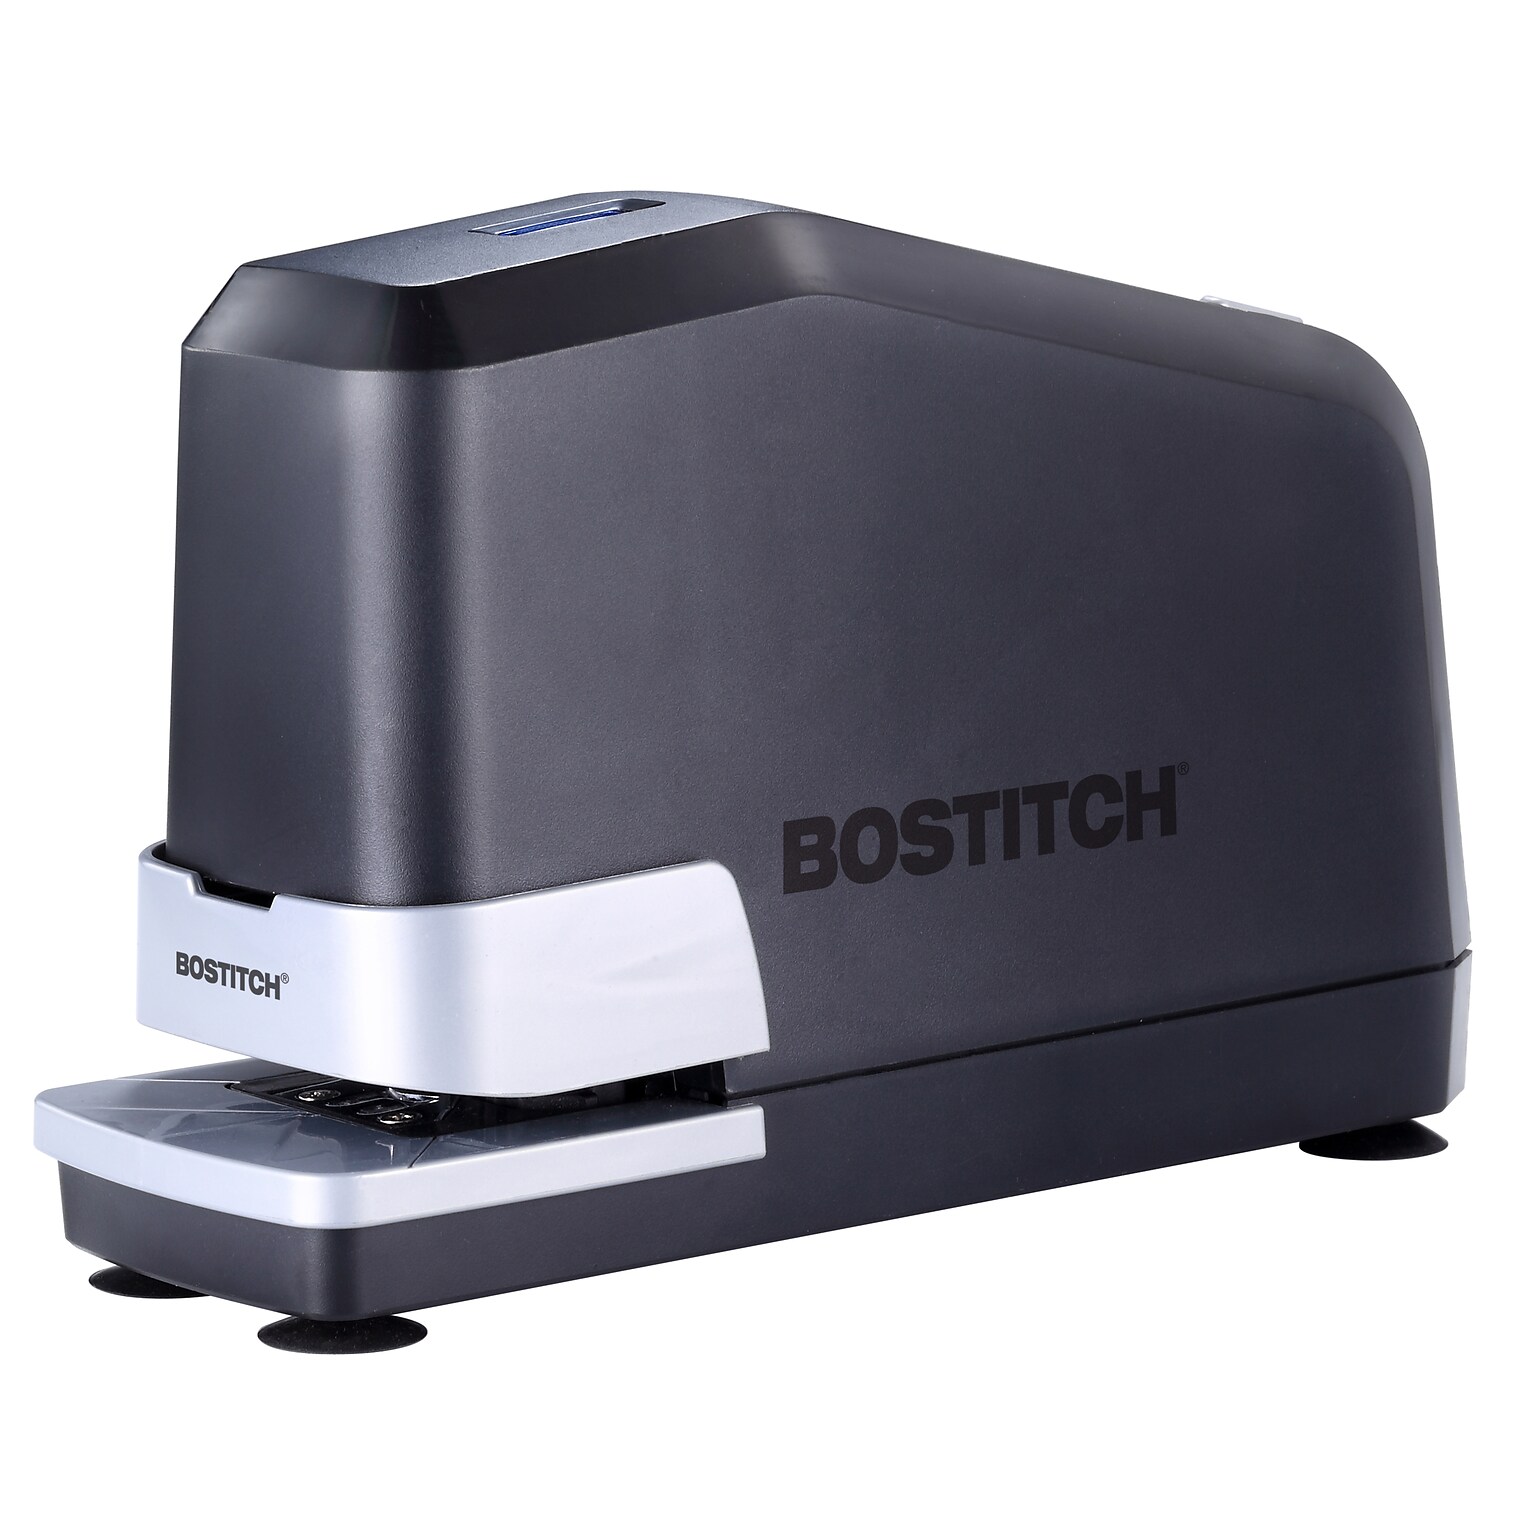 Bostitch Impulse Electric Stapler, 45-Sheet Capacity, Black (B8E)